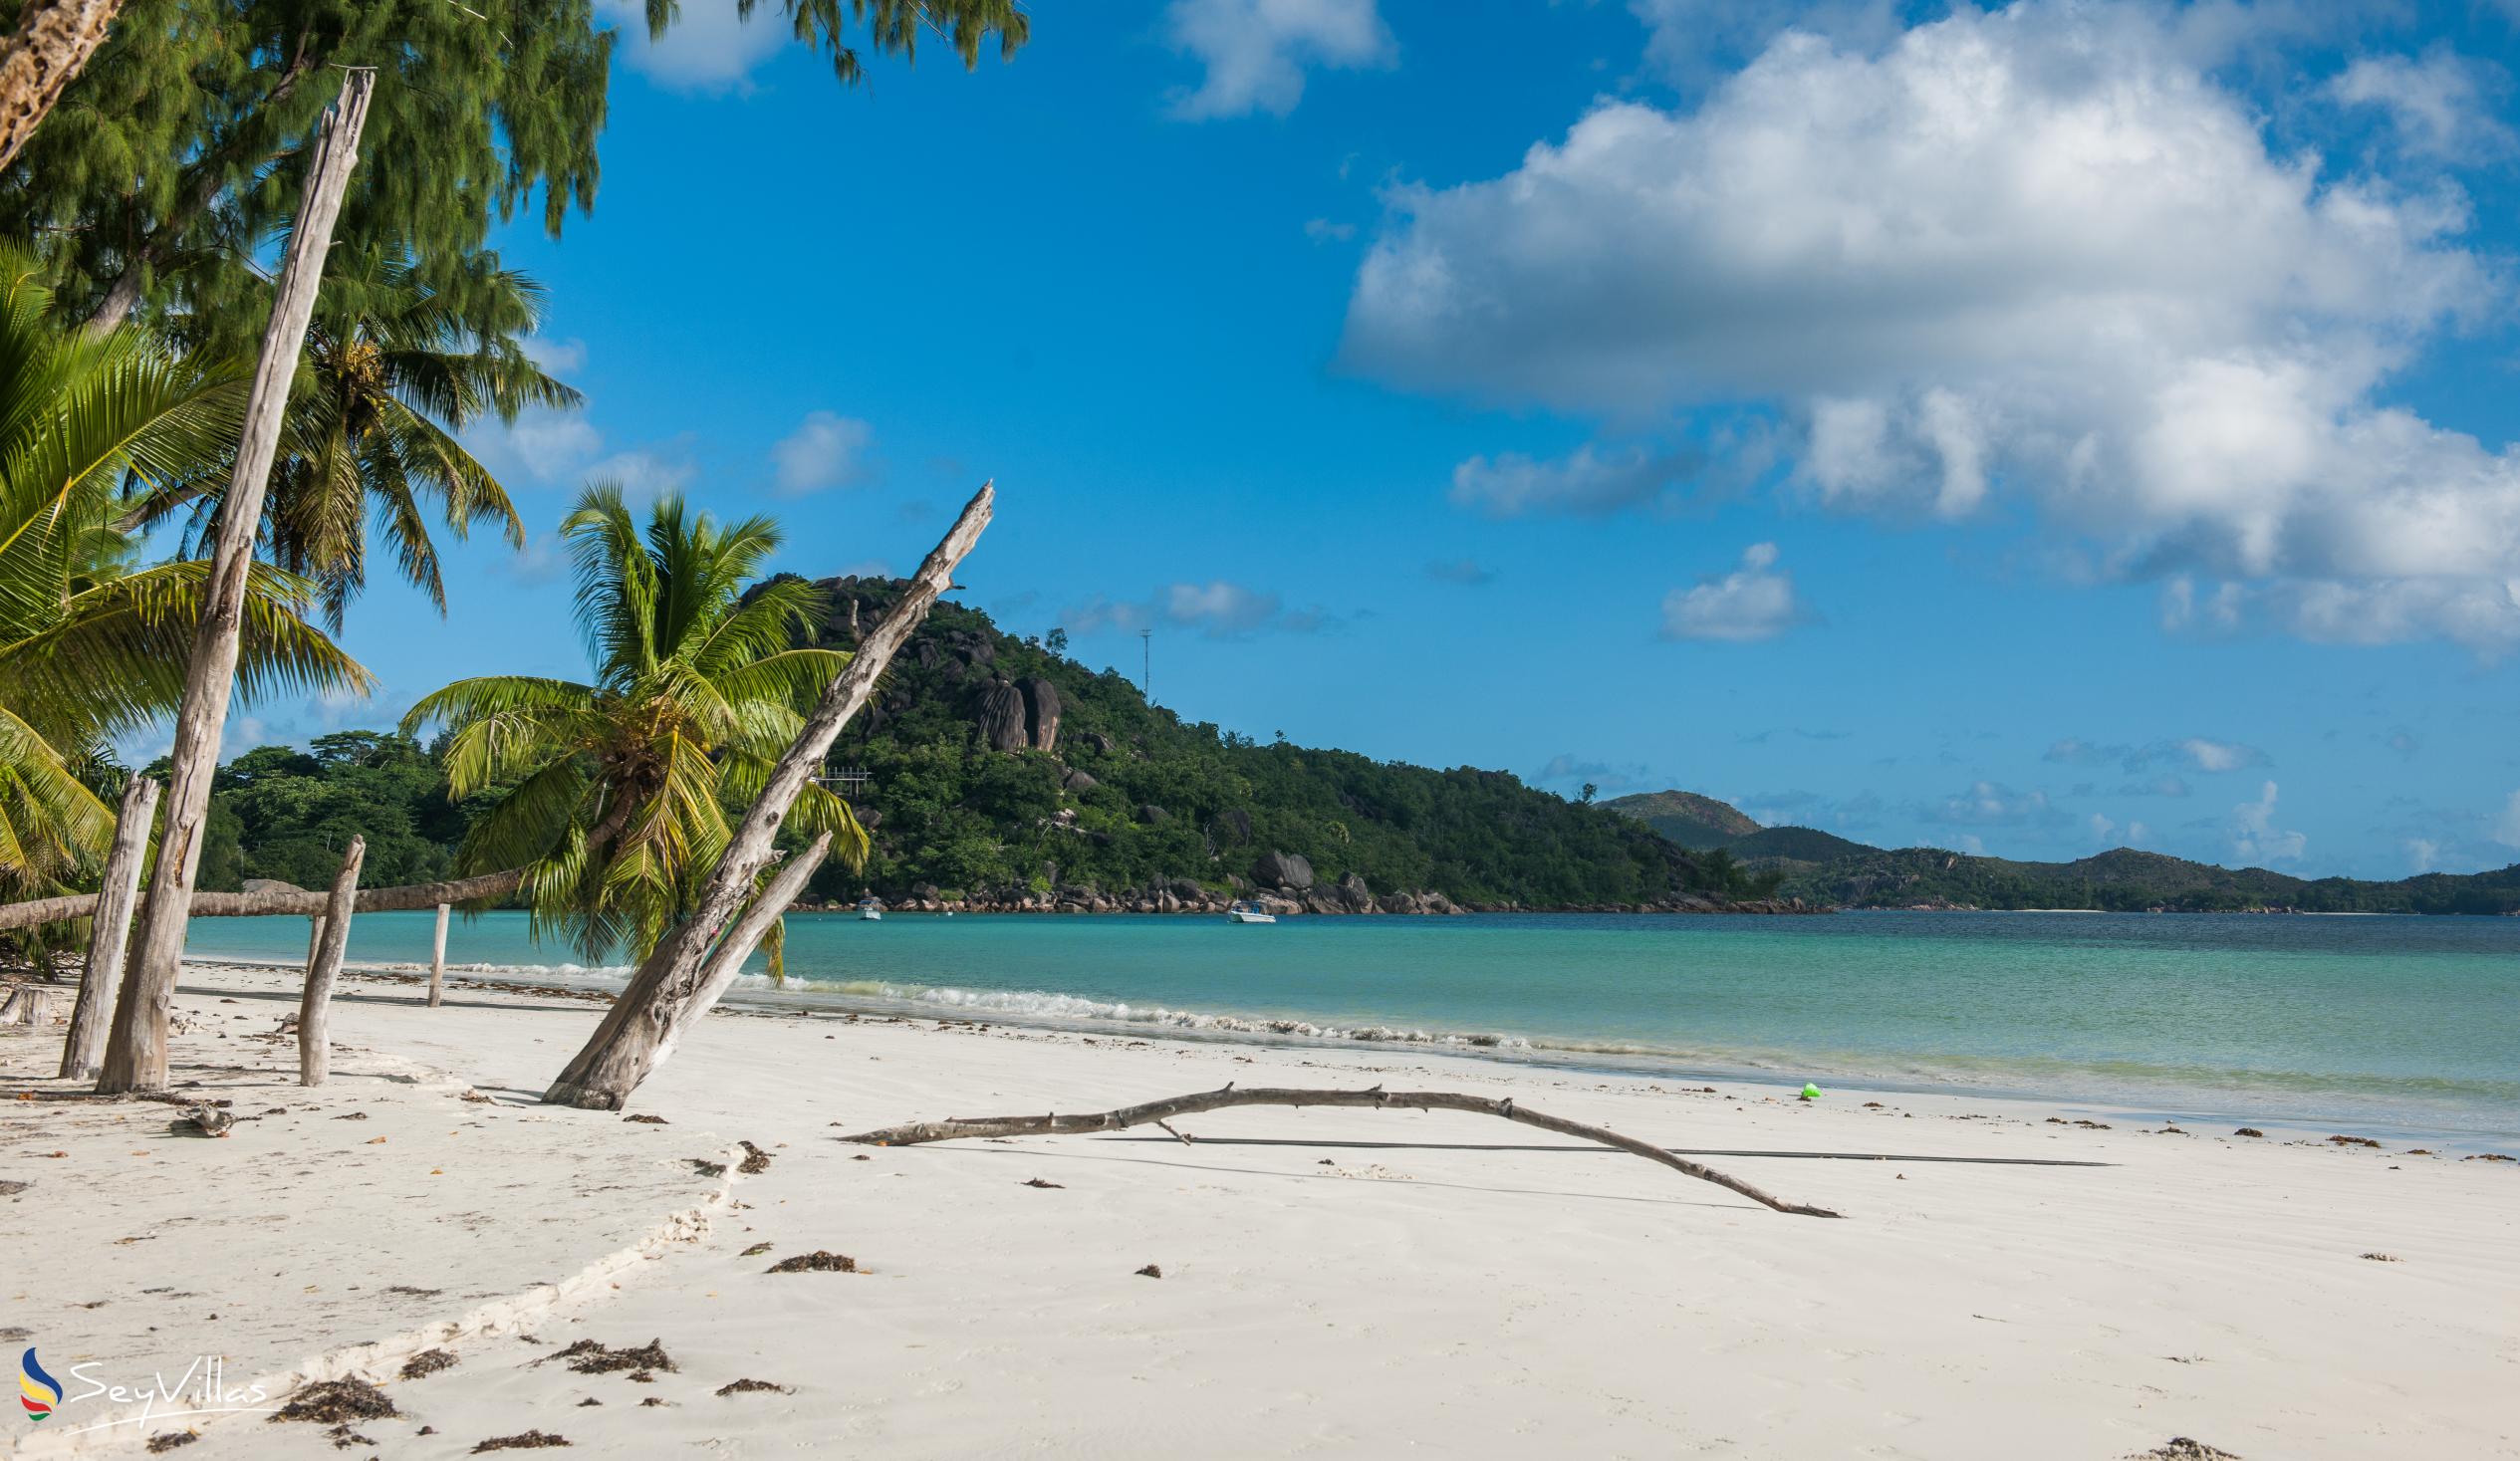 Photo 47: Berjaya Praslin Resort - Beaches - Praslin (Seychelles)